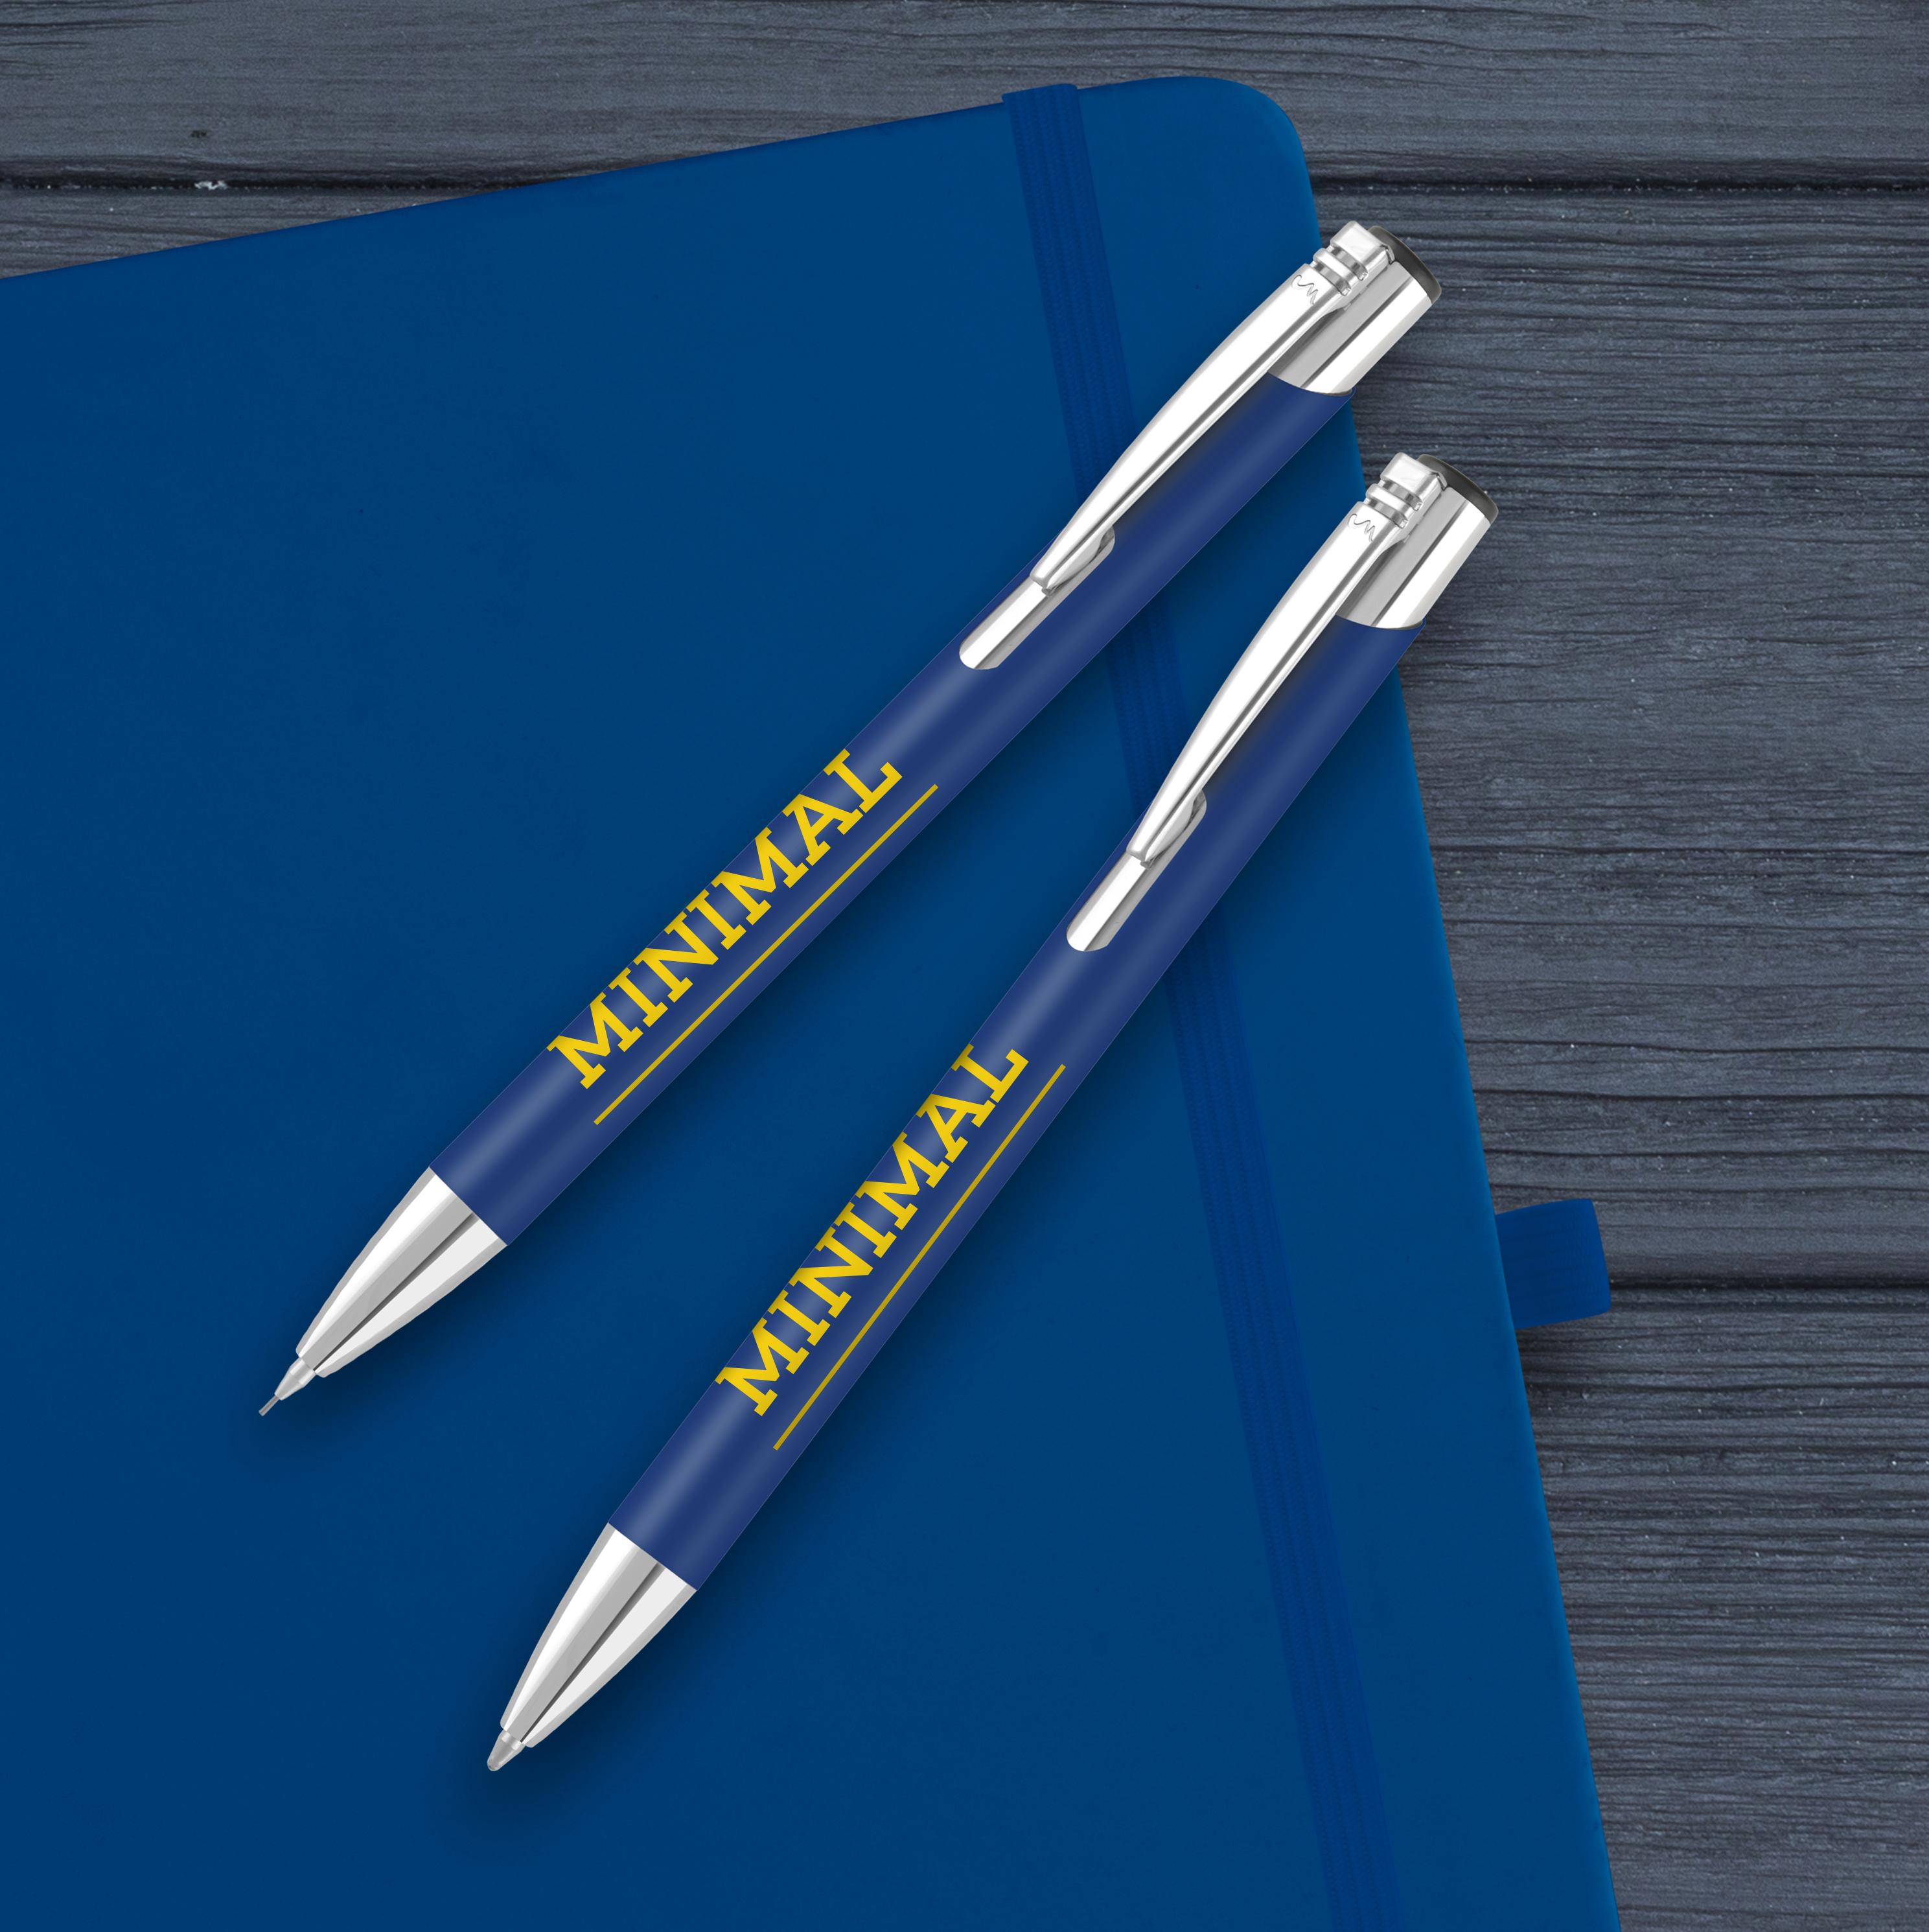 Your custom printed logo design branded onto the pen